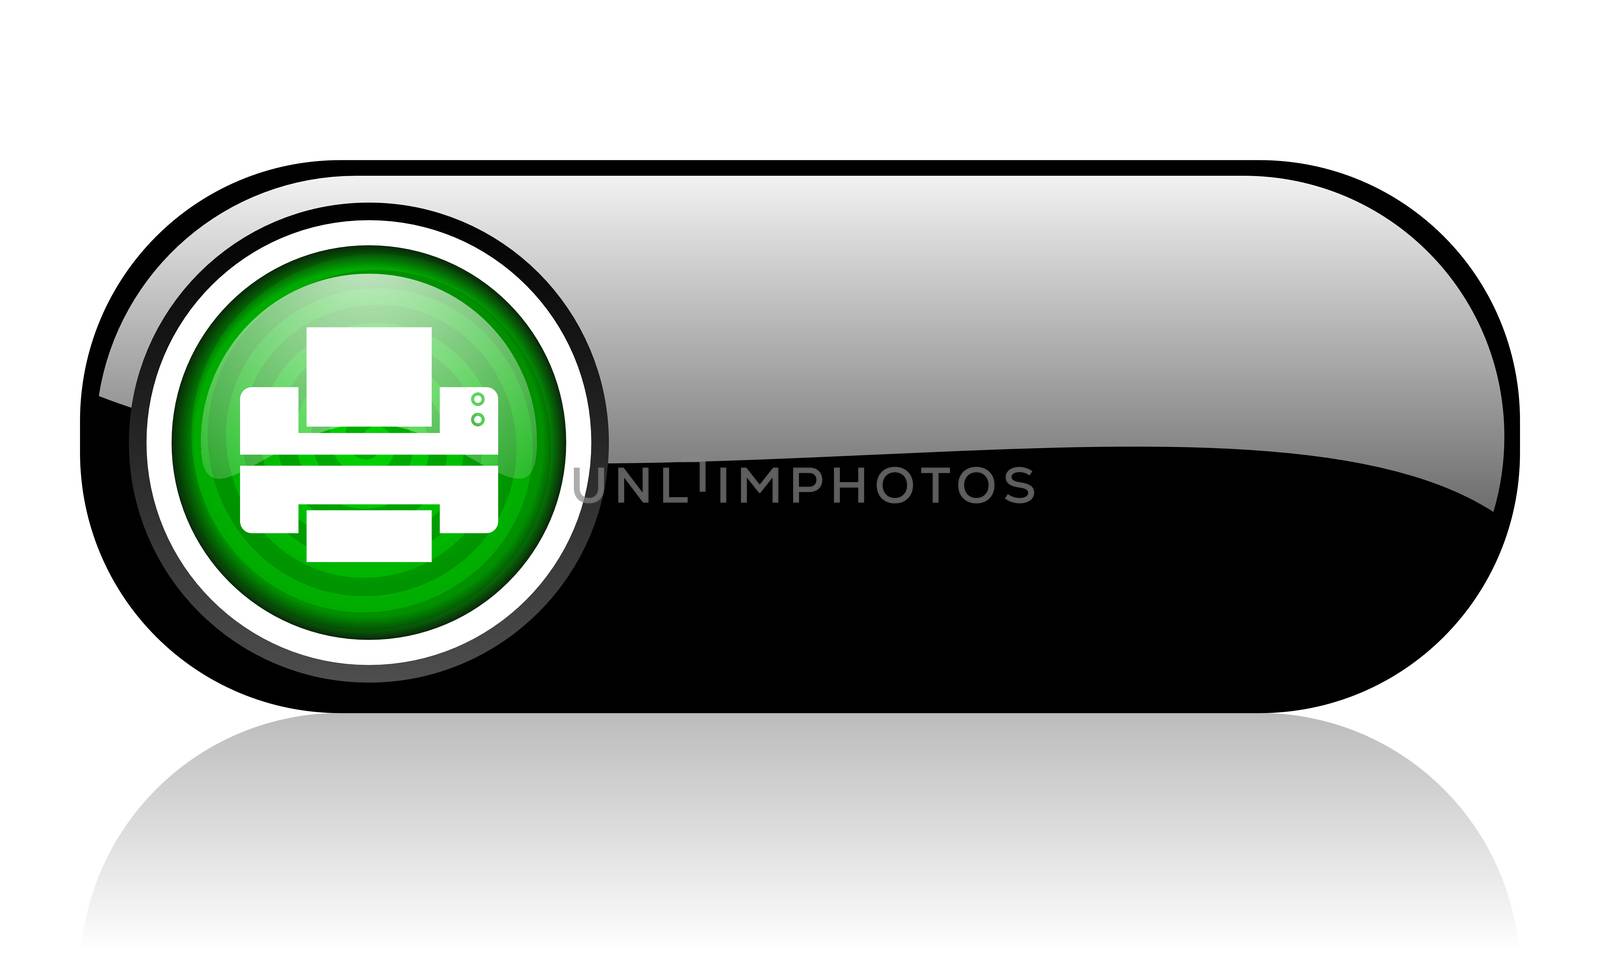 printer black and green web icon on white background